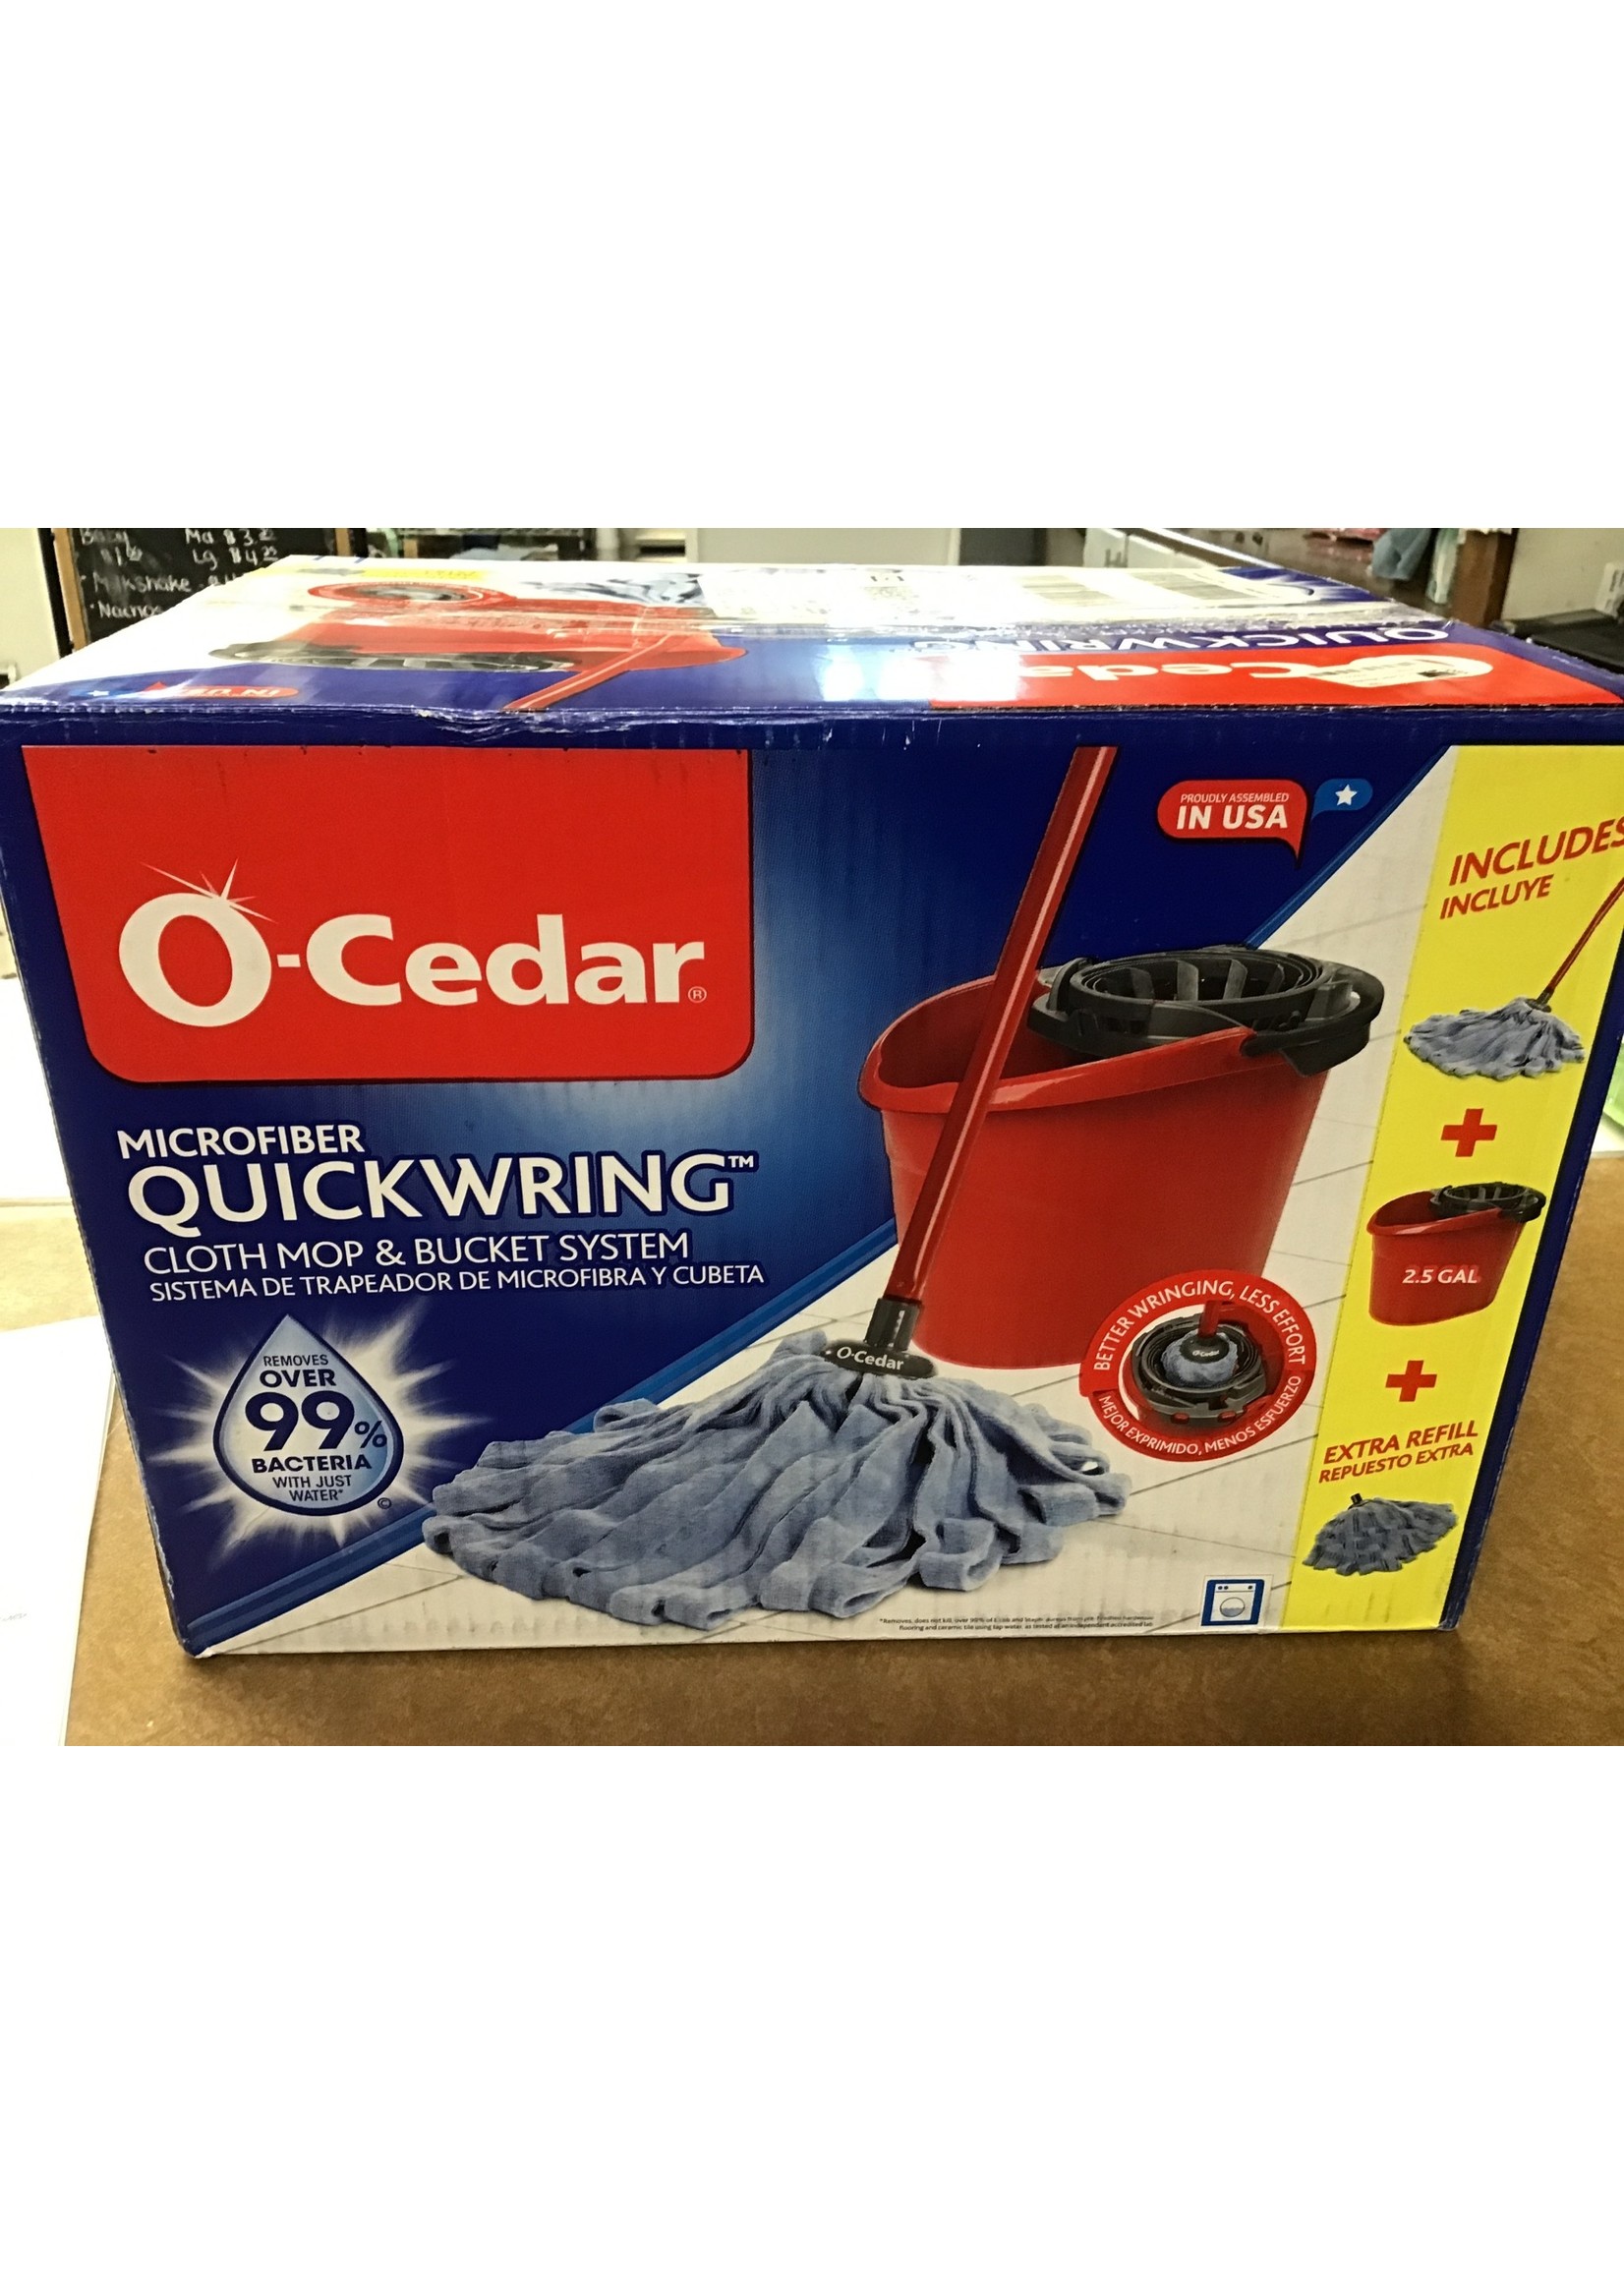 O-Cedar Microfiber Cloth Mop & QuickWring Bucket with 1 Extra Refill